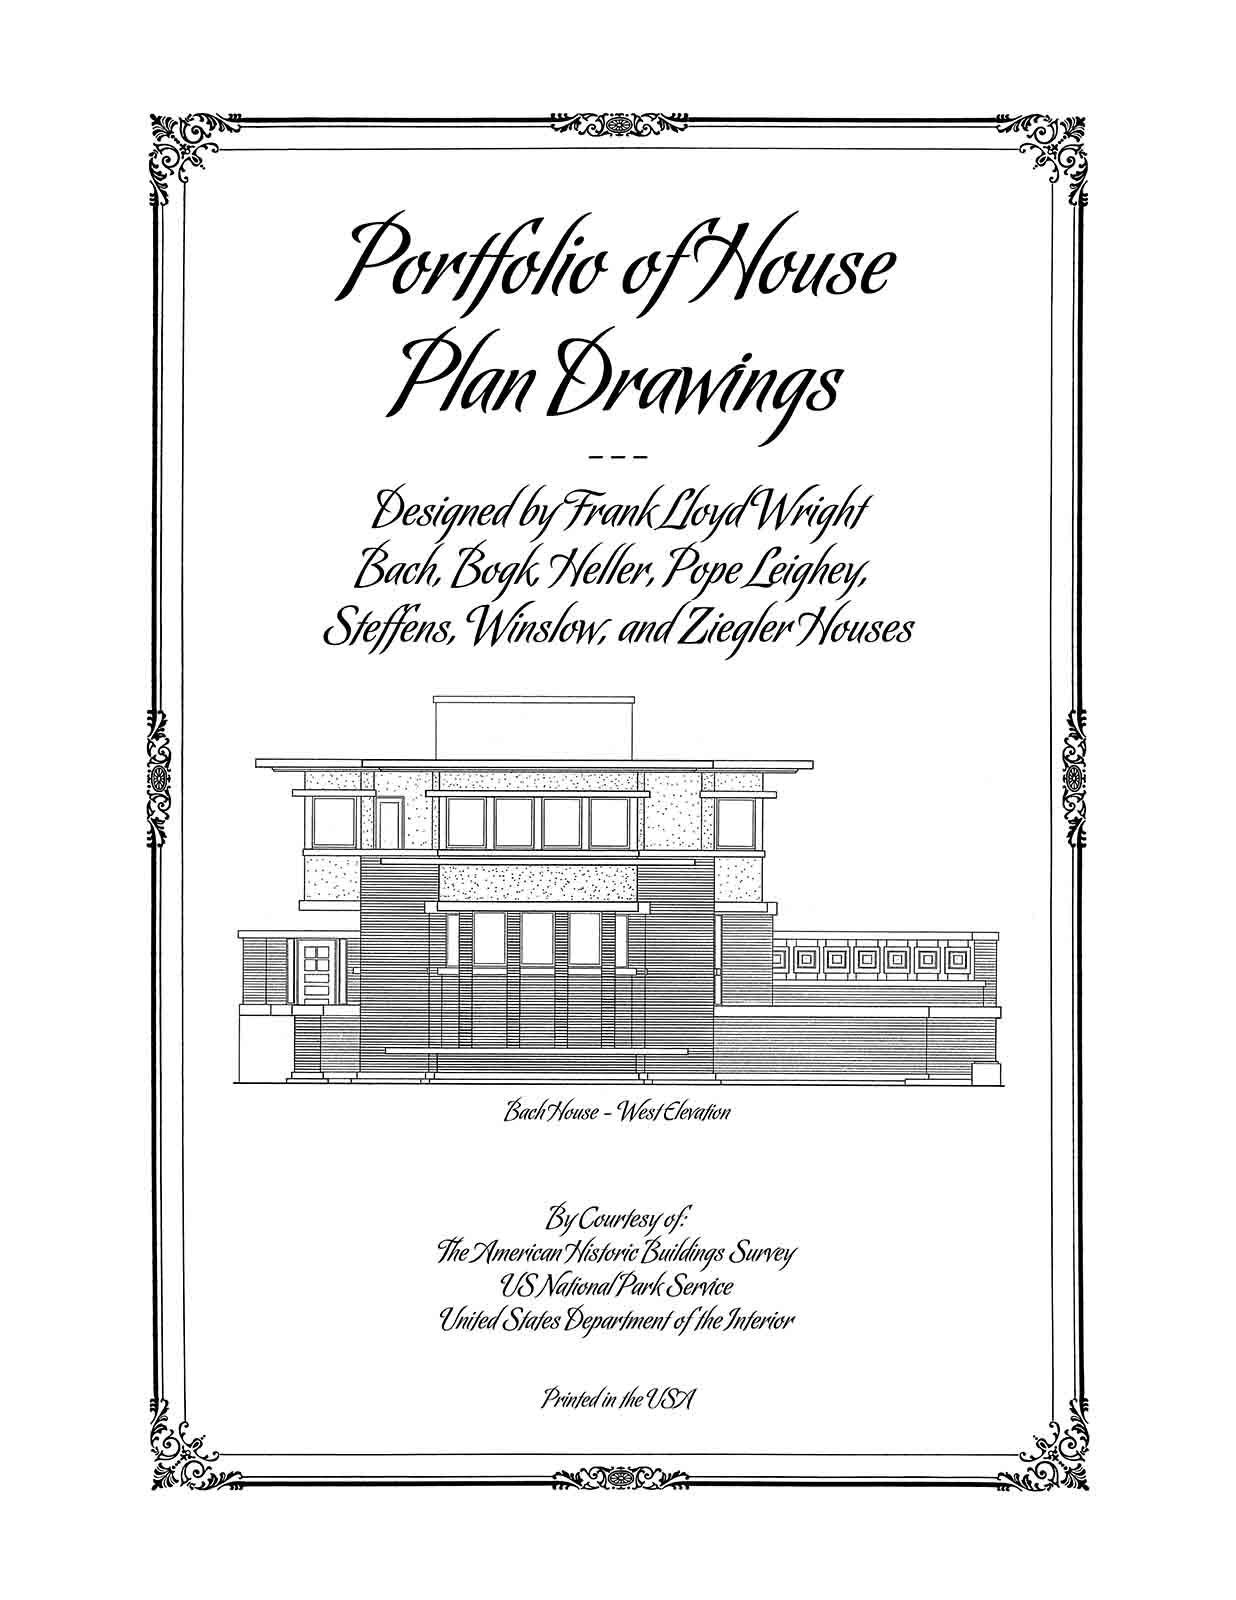 Frank Lloyd Wright Portfolio of House Plan Drawings - Plan Book